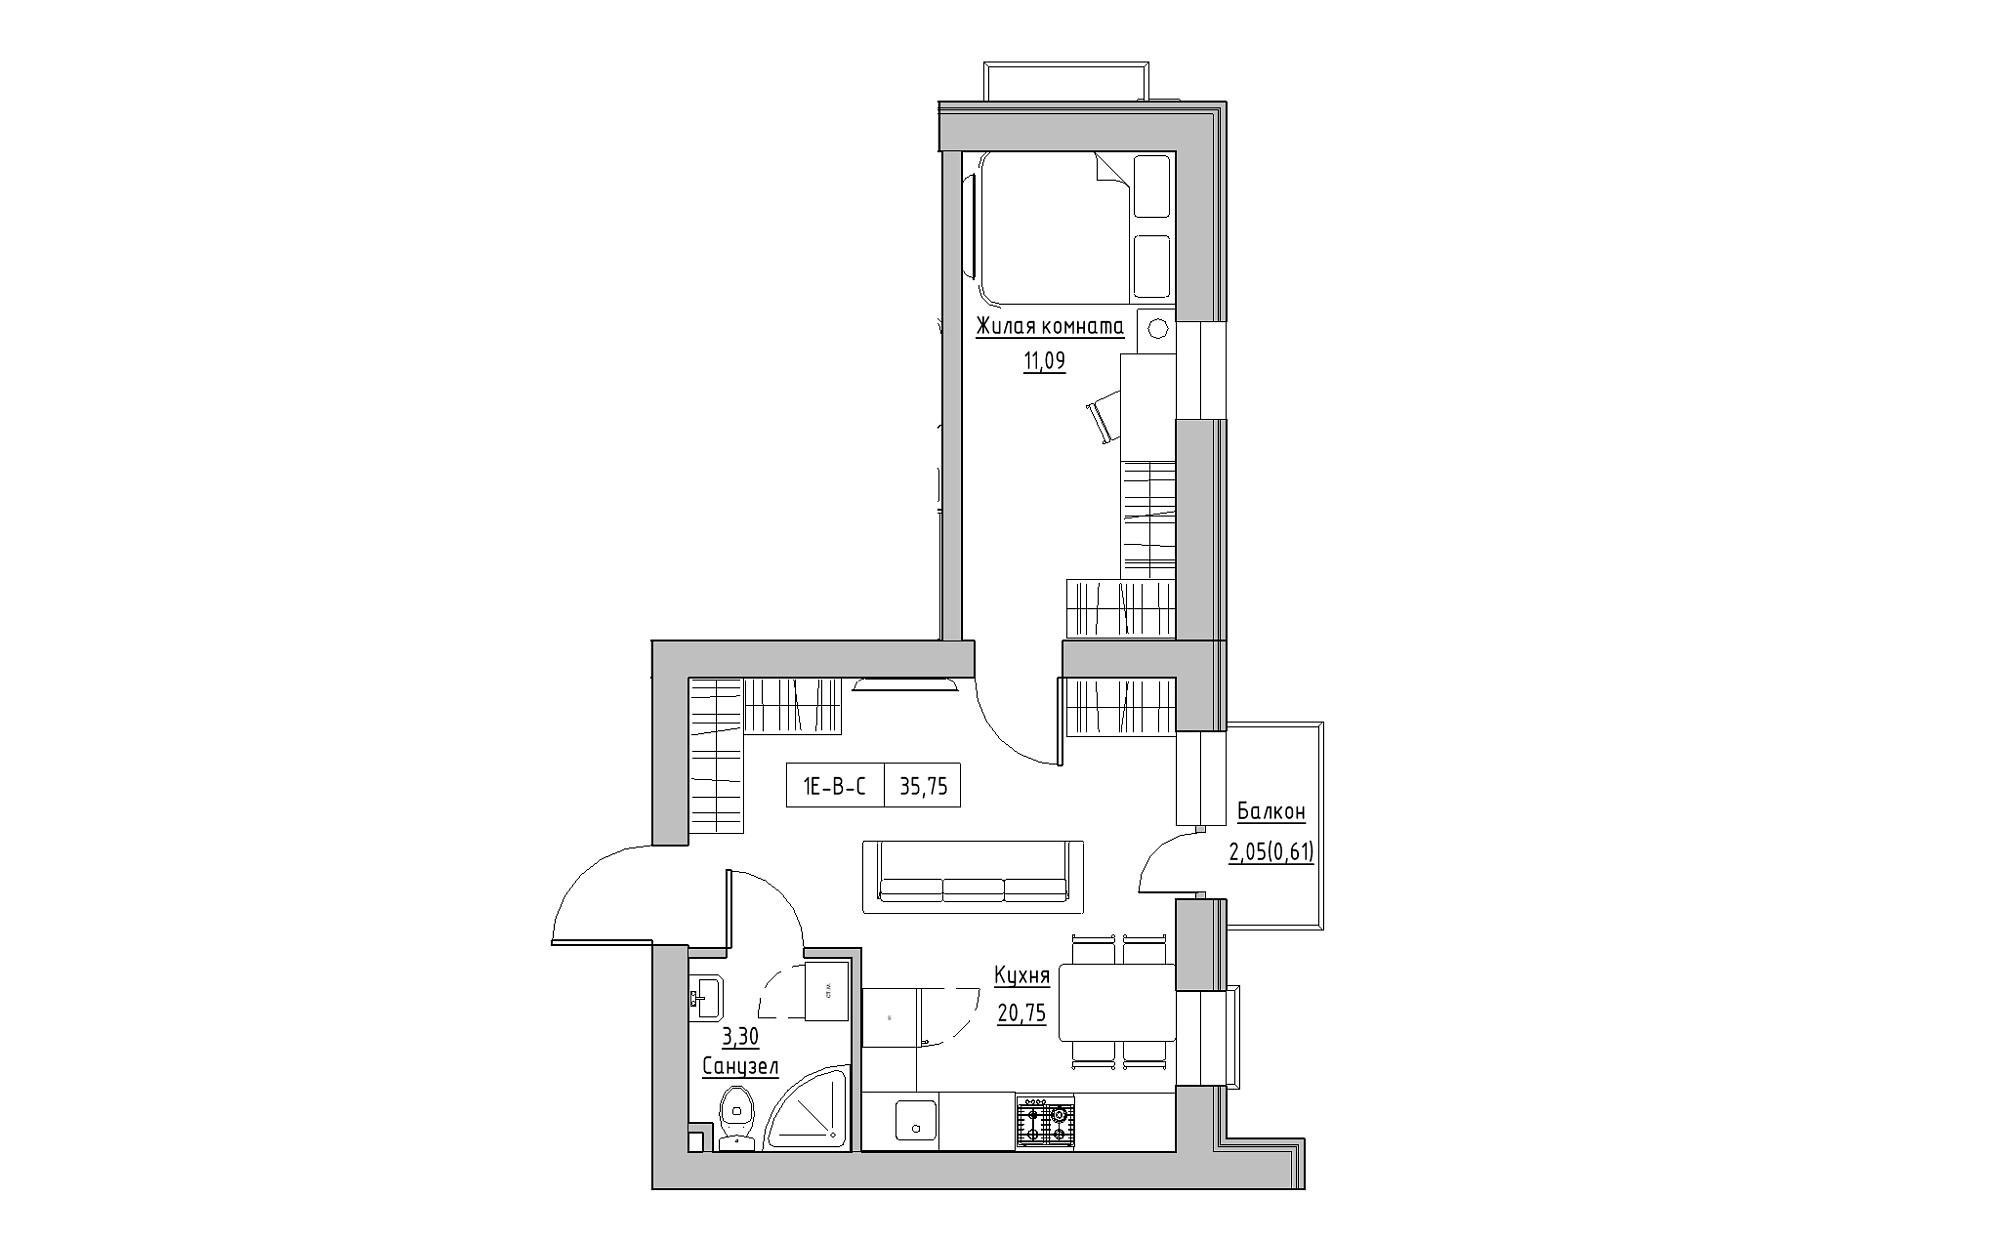 Planning 1-rm flats area 35.75m2, KS-022-03/0009.